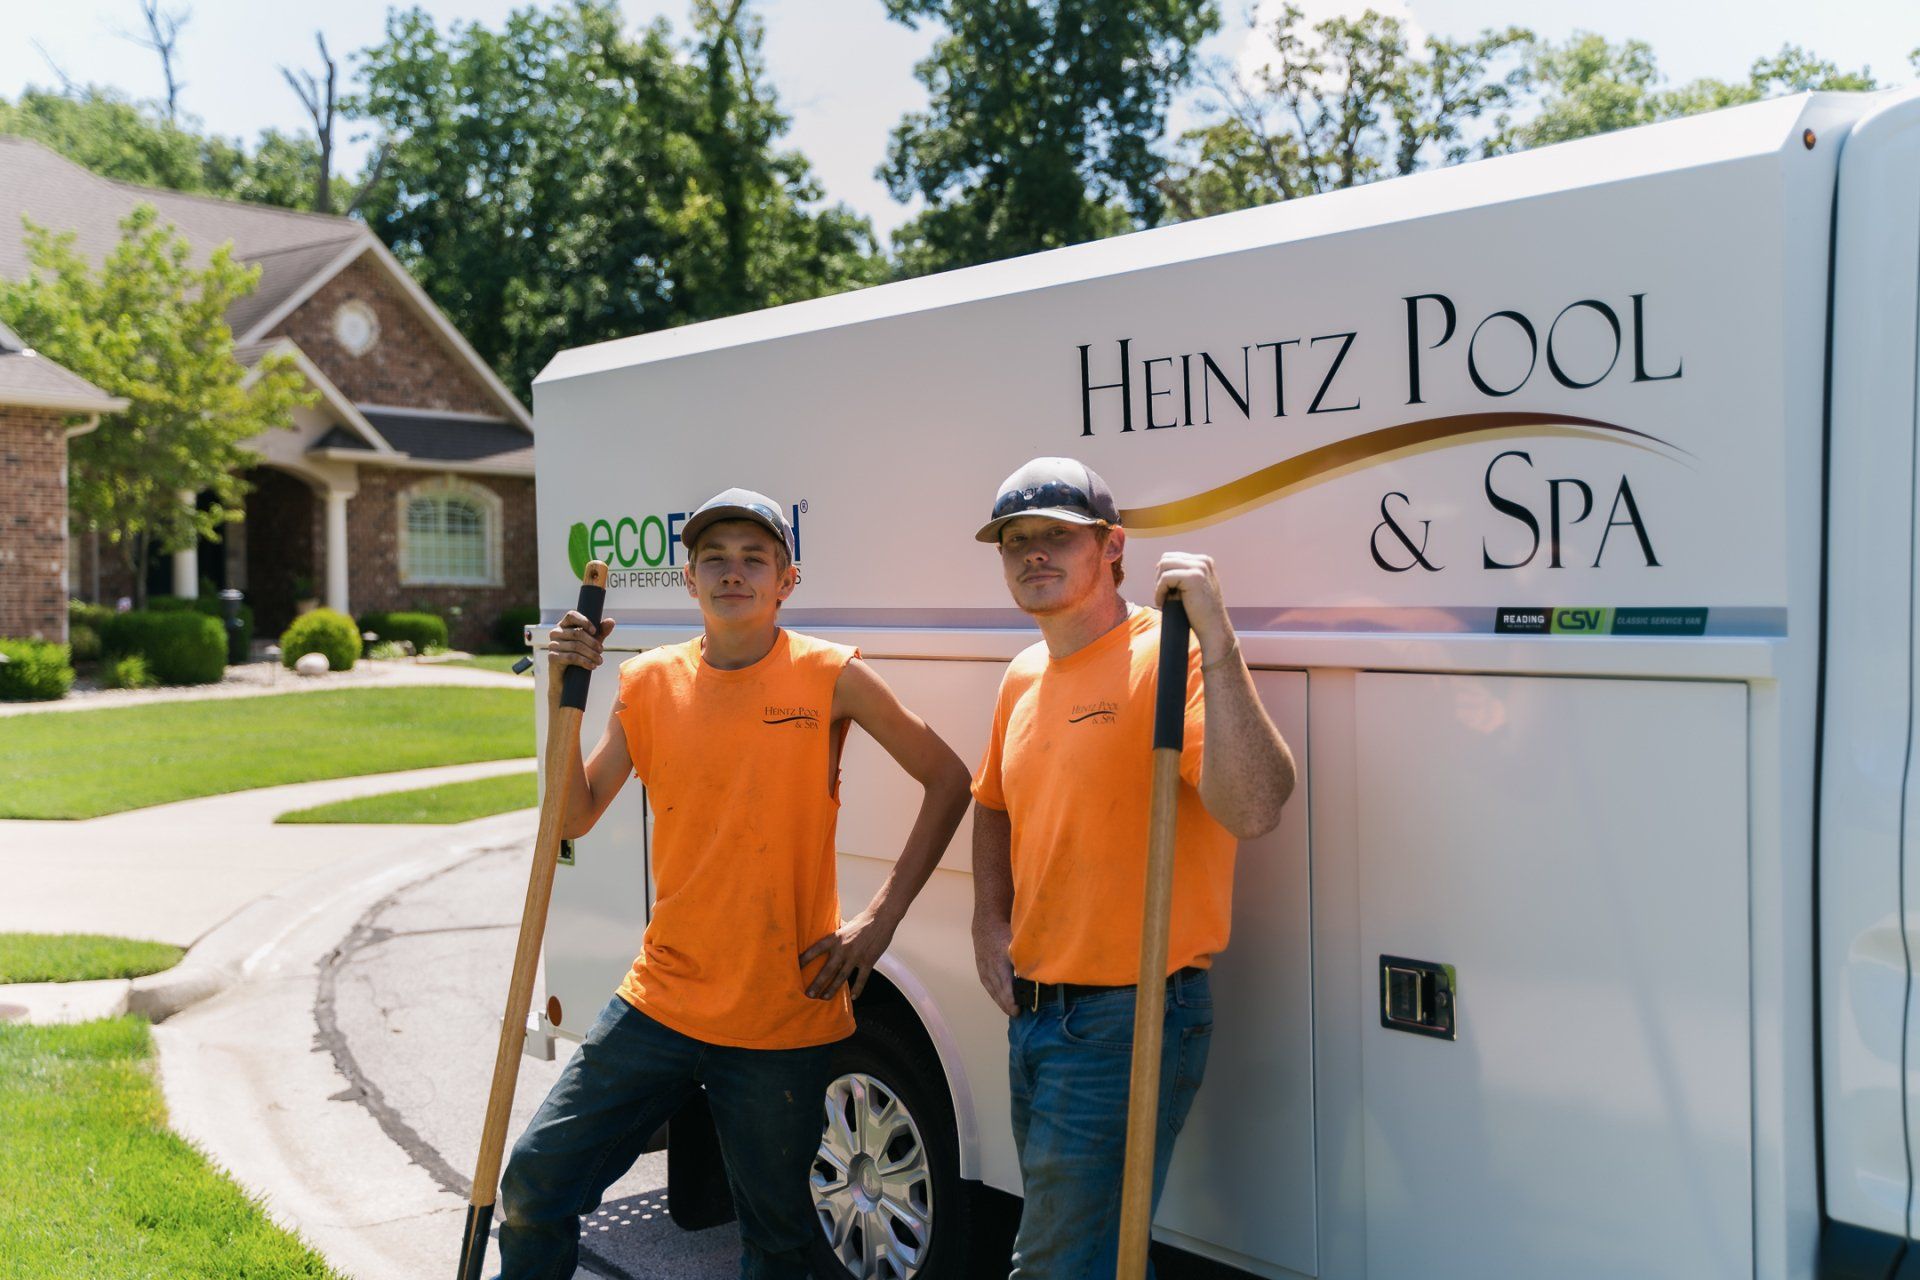 Two Heintz Pool & Spa worker wearing orange uniform standing side by side with company truck on background